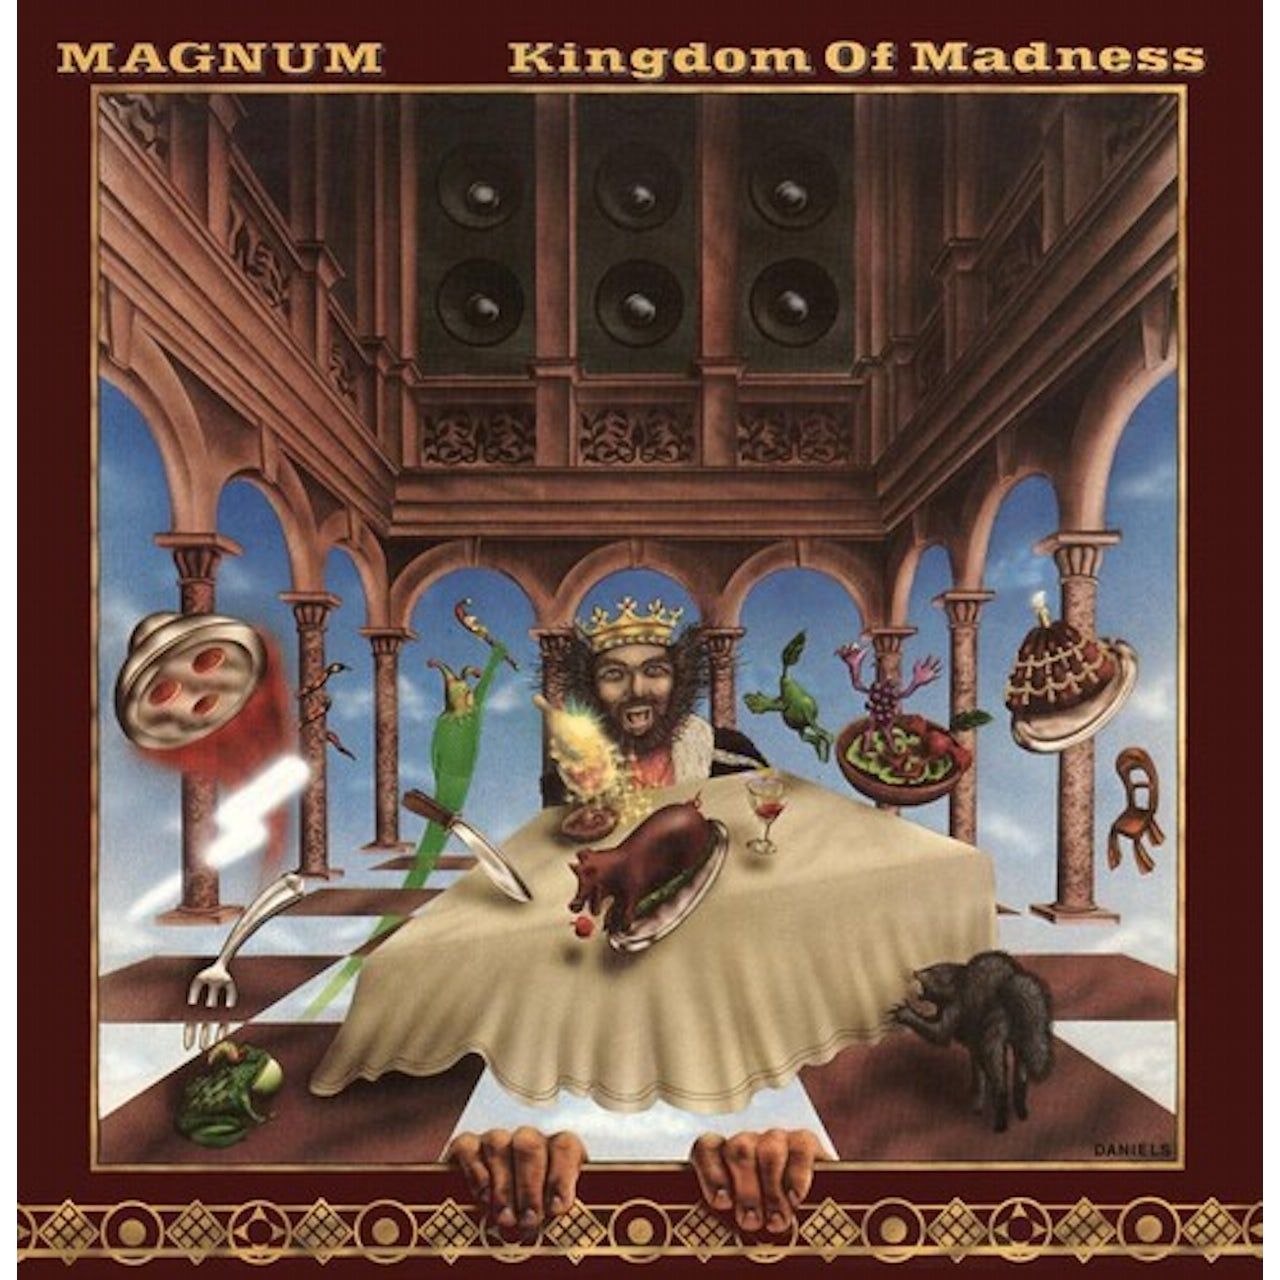 dungeon lords золотое издание 0630428088412, Виниловая пластинка Magnum, Kingdom Of Madness